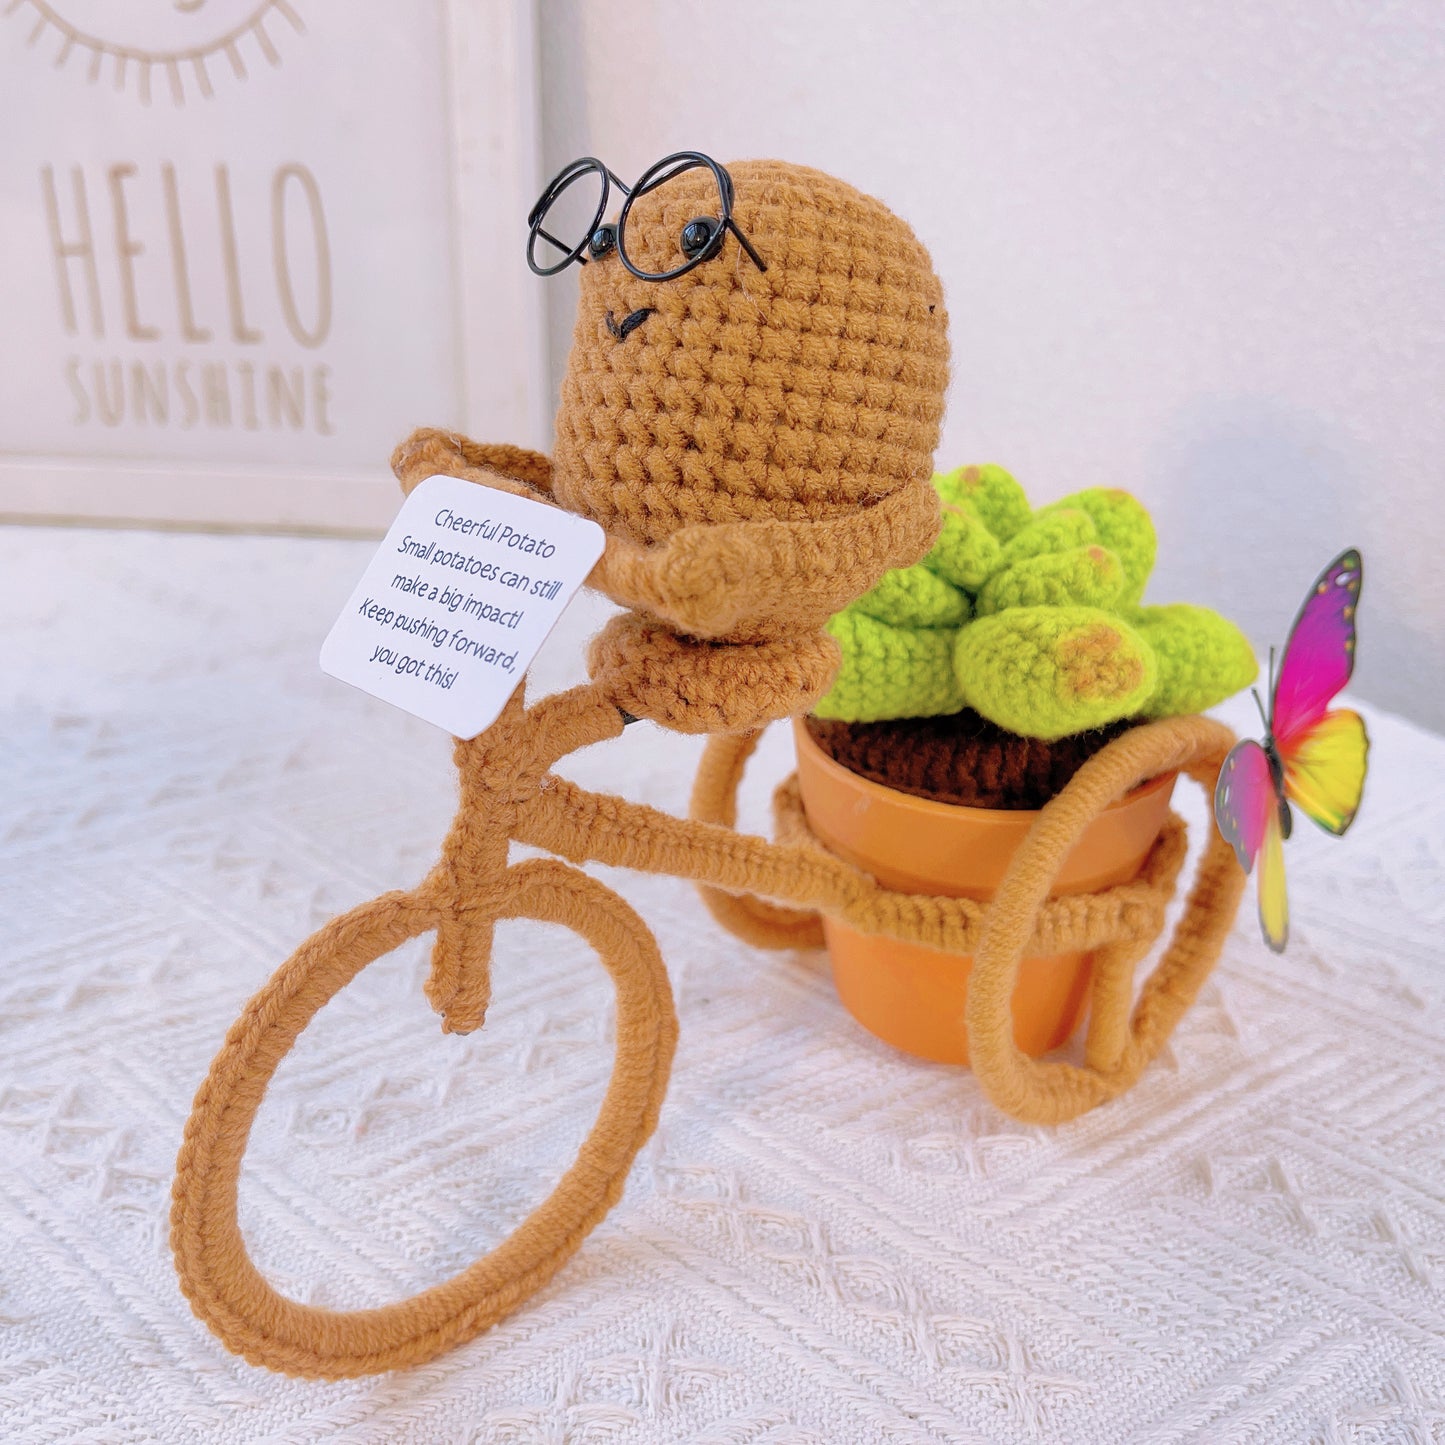 Hand-Crocheted Cheerful Potato Succulent Cactus Bicycle Décor - Unique Home Decoration Centerpiece Birthday Gift Desk Workspace